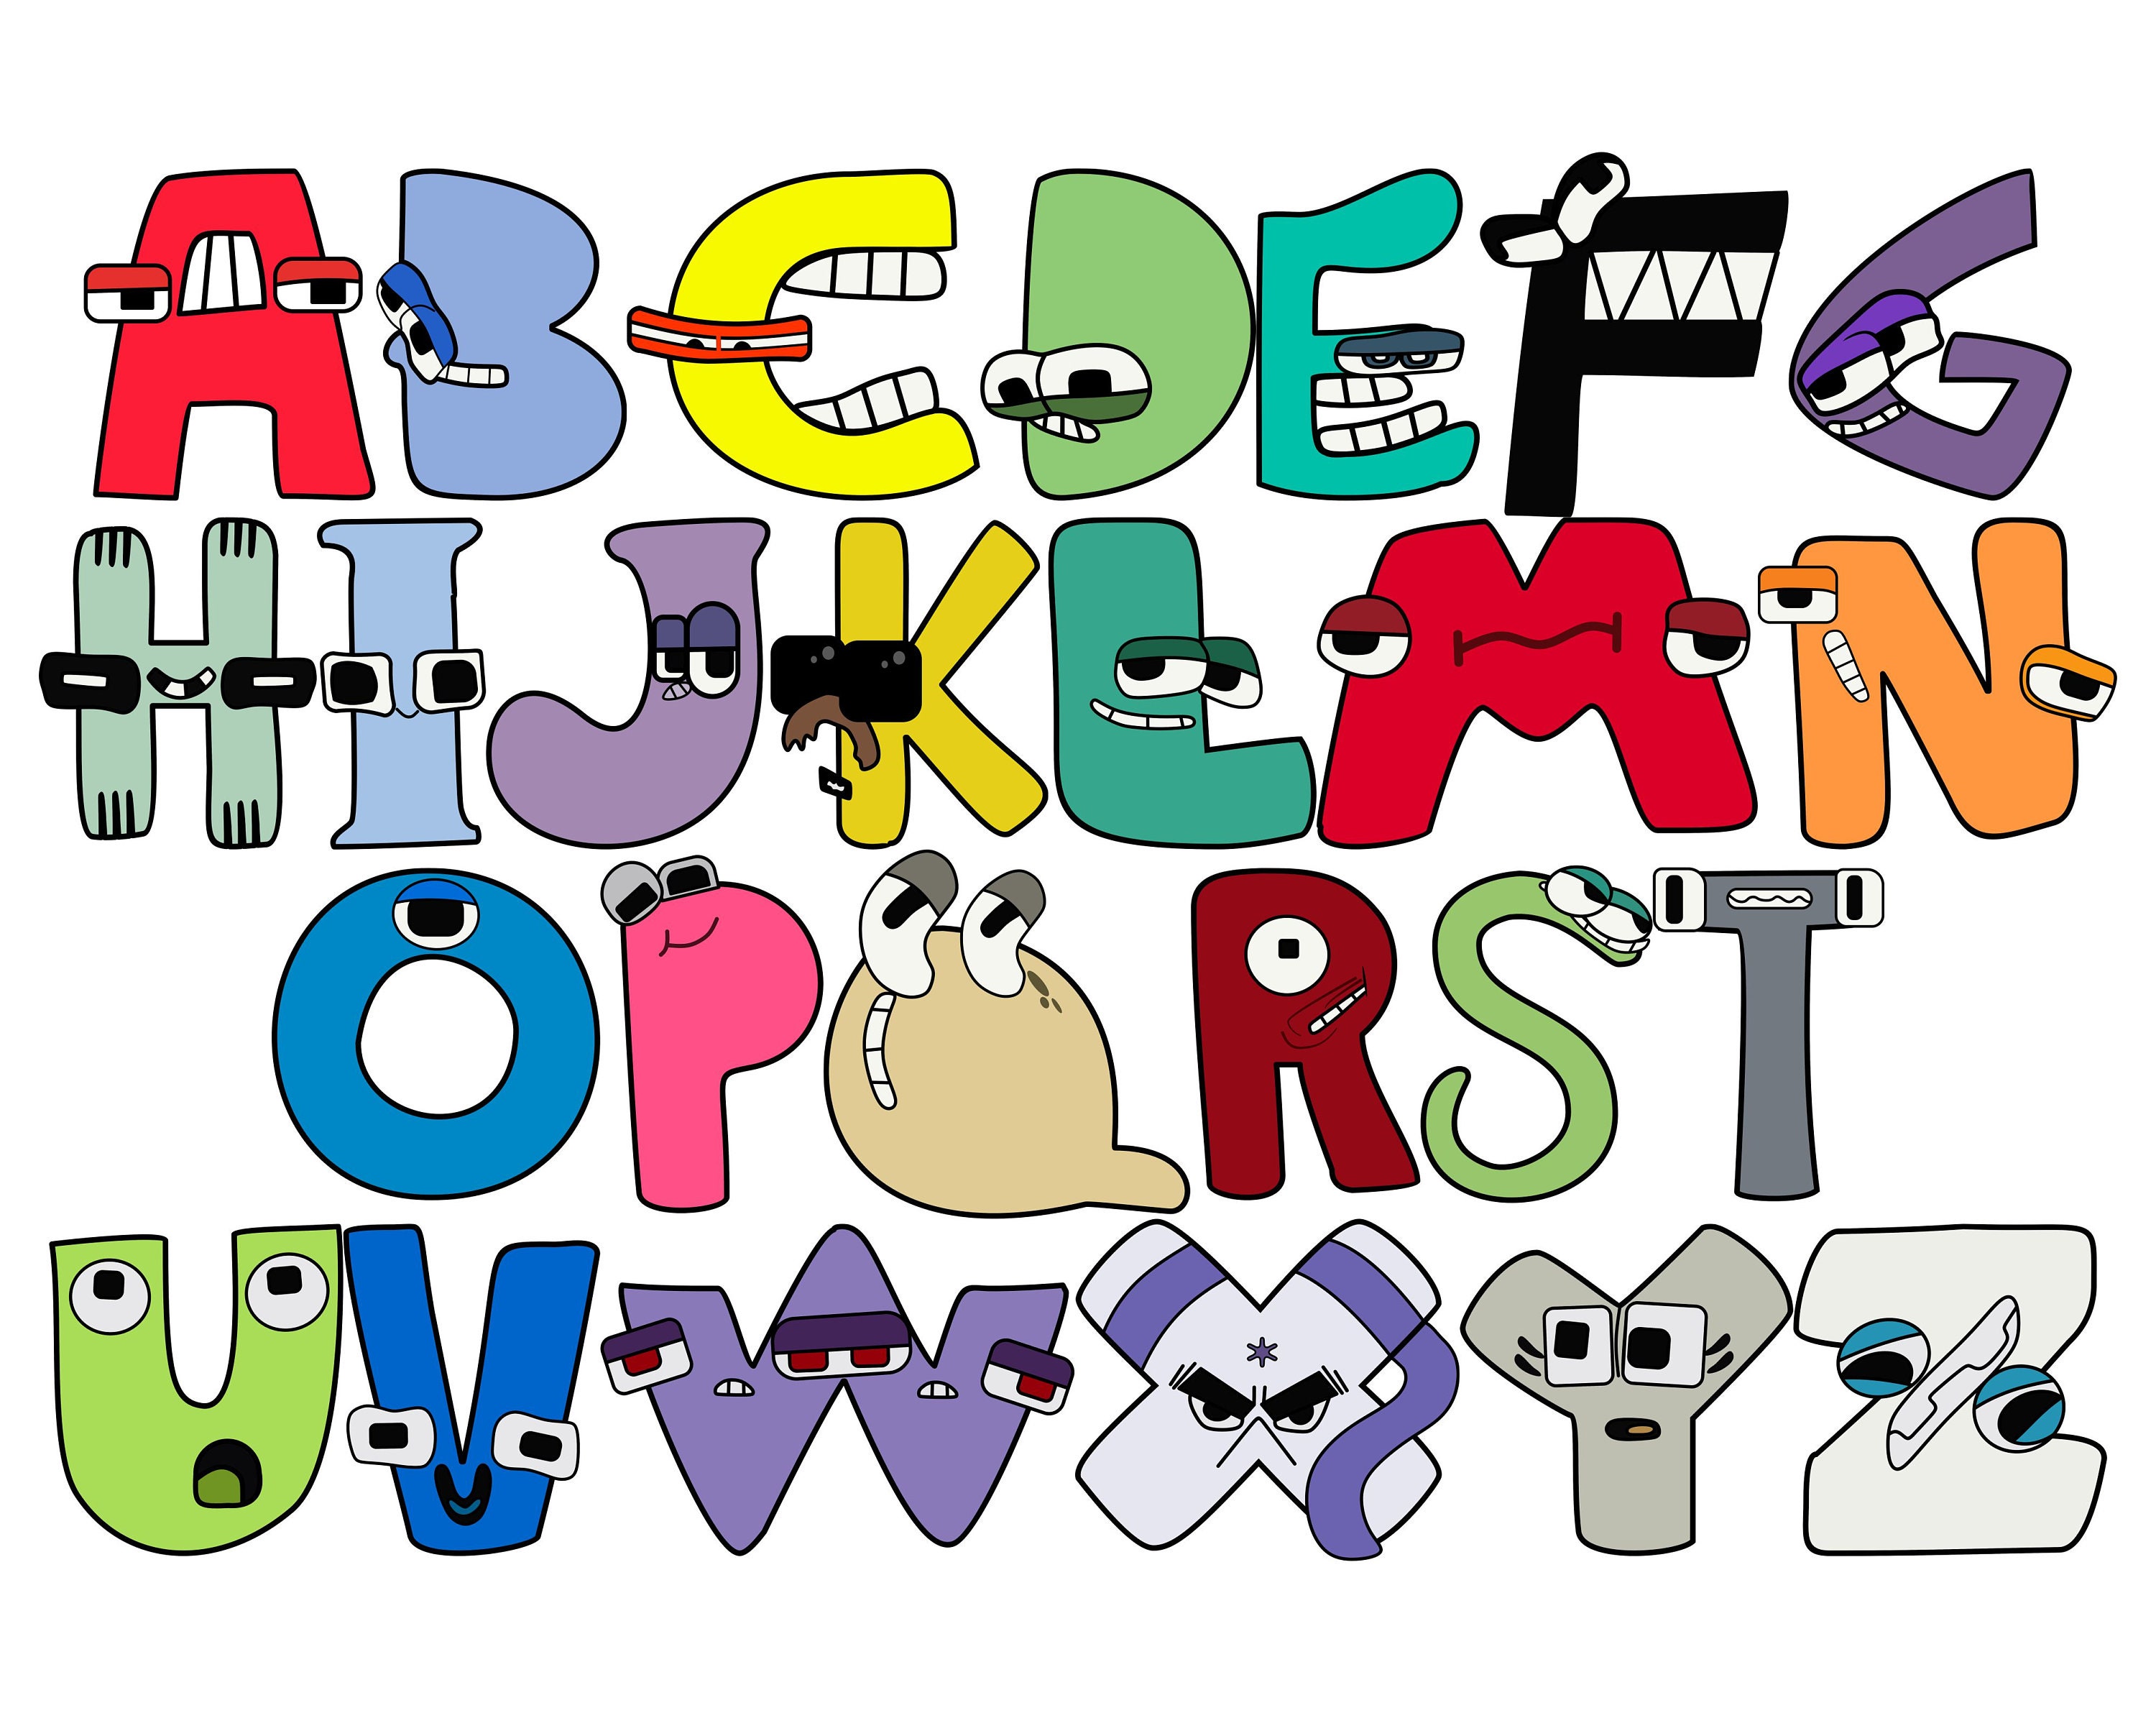 50pcs Alphabet Lore Doodle Stickers Decorative Waterproof Stickers